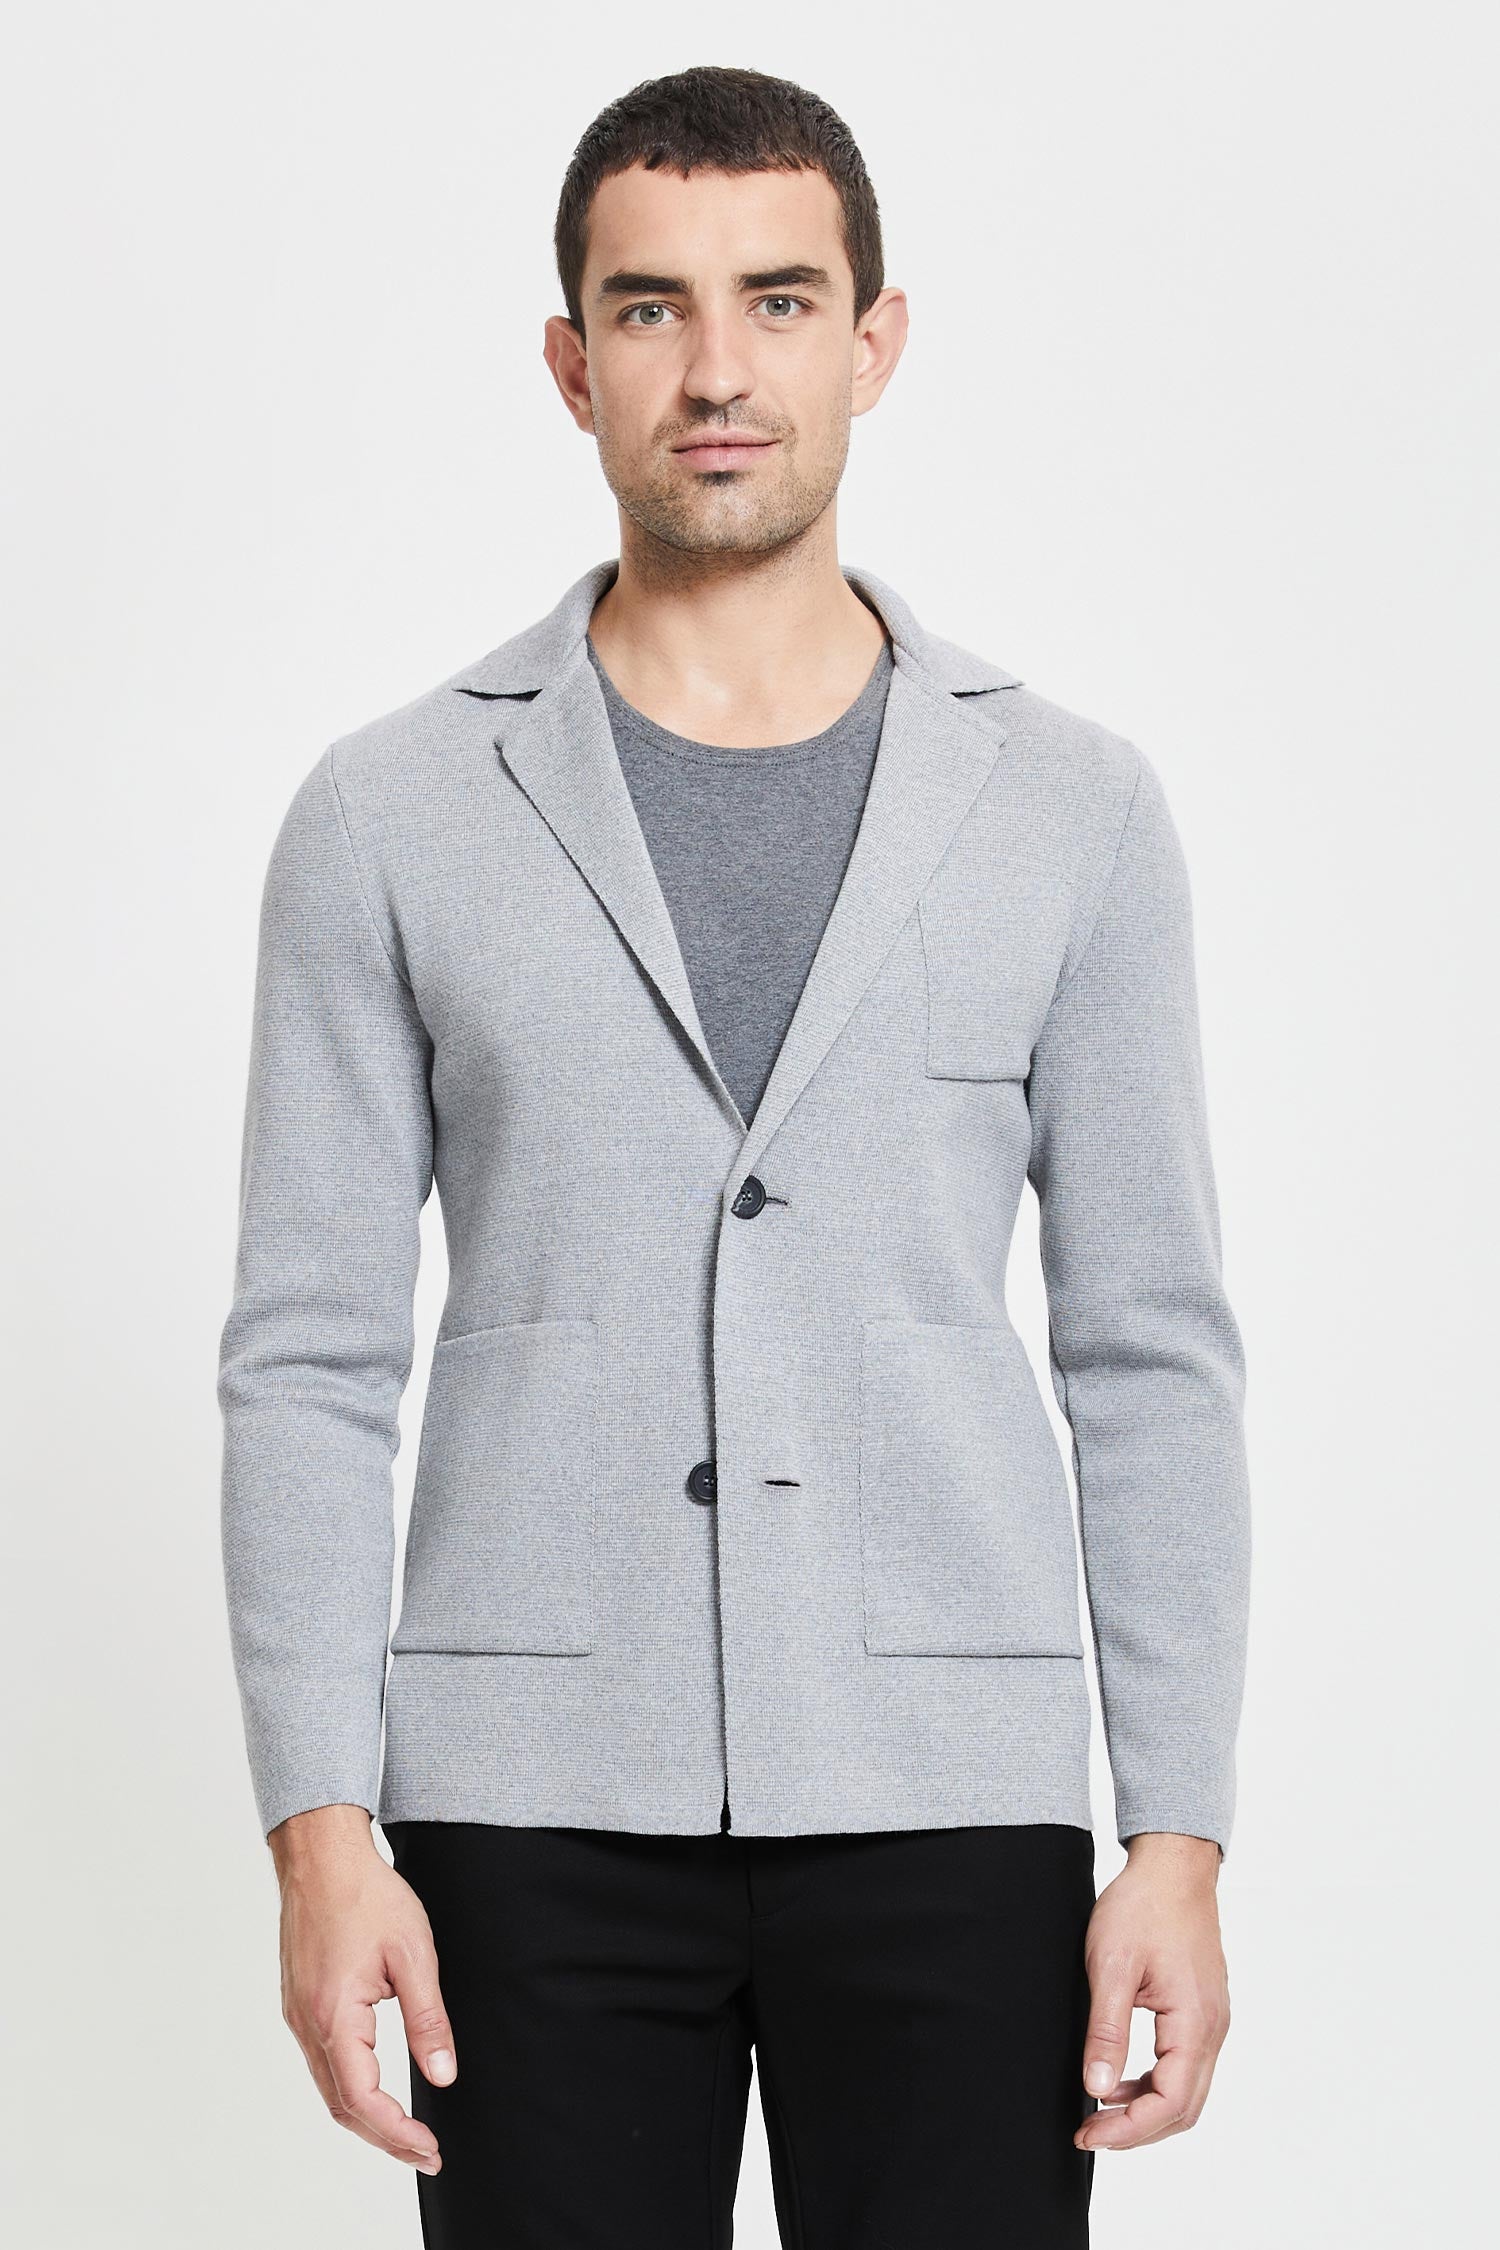 FRENN Elias sustainable premium quality extra fine merino wool cardigan jacket grey